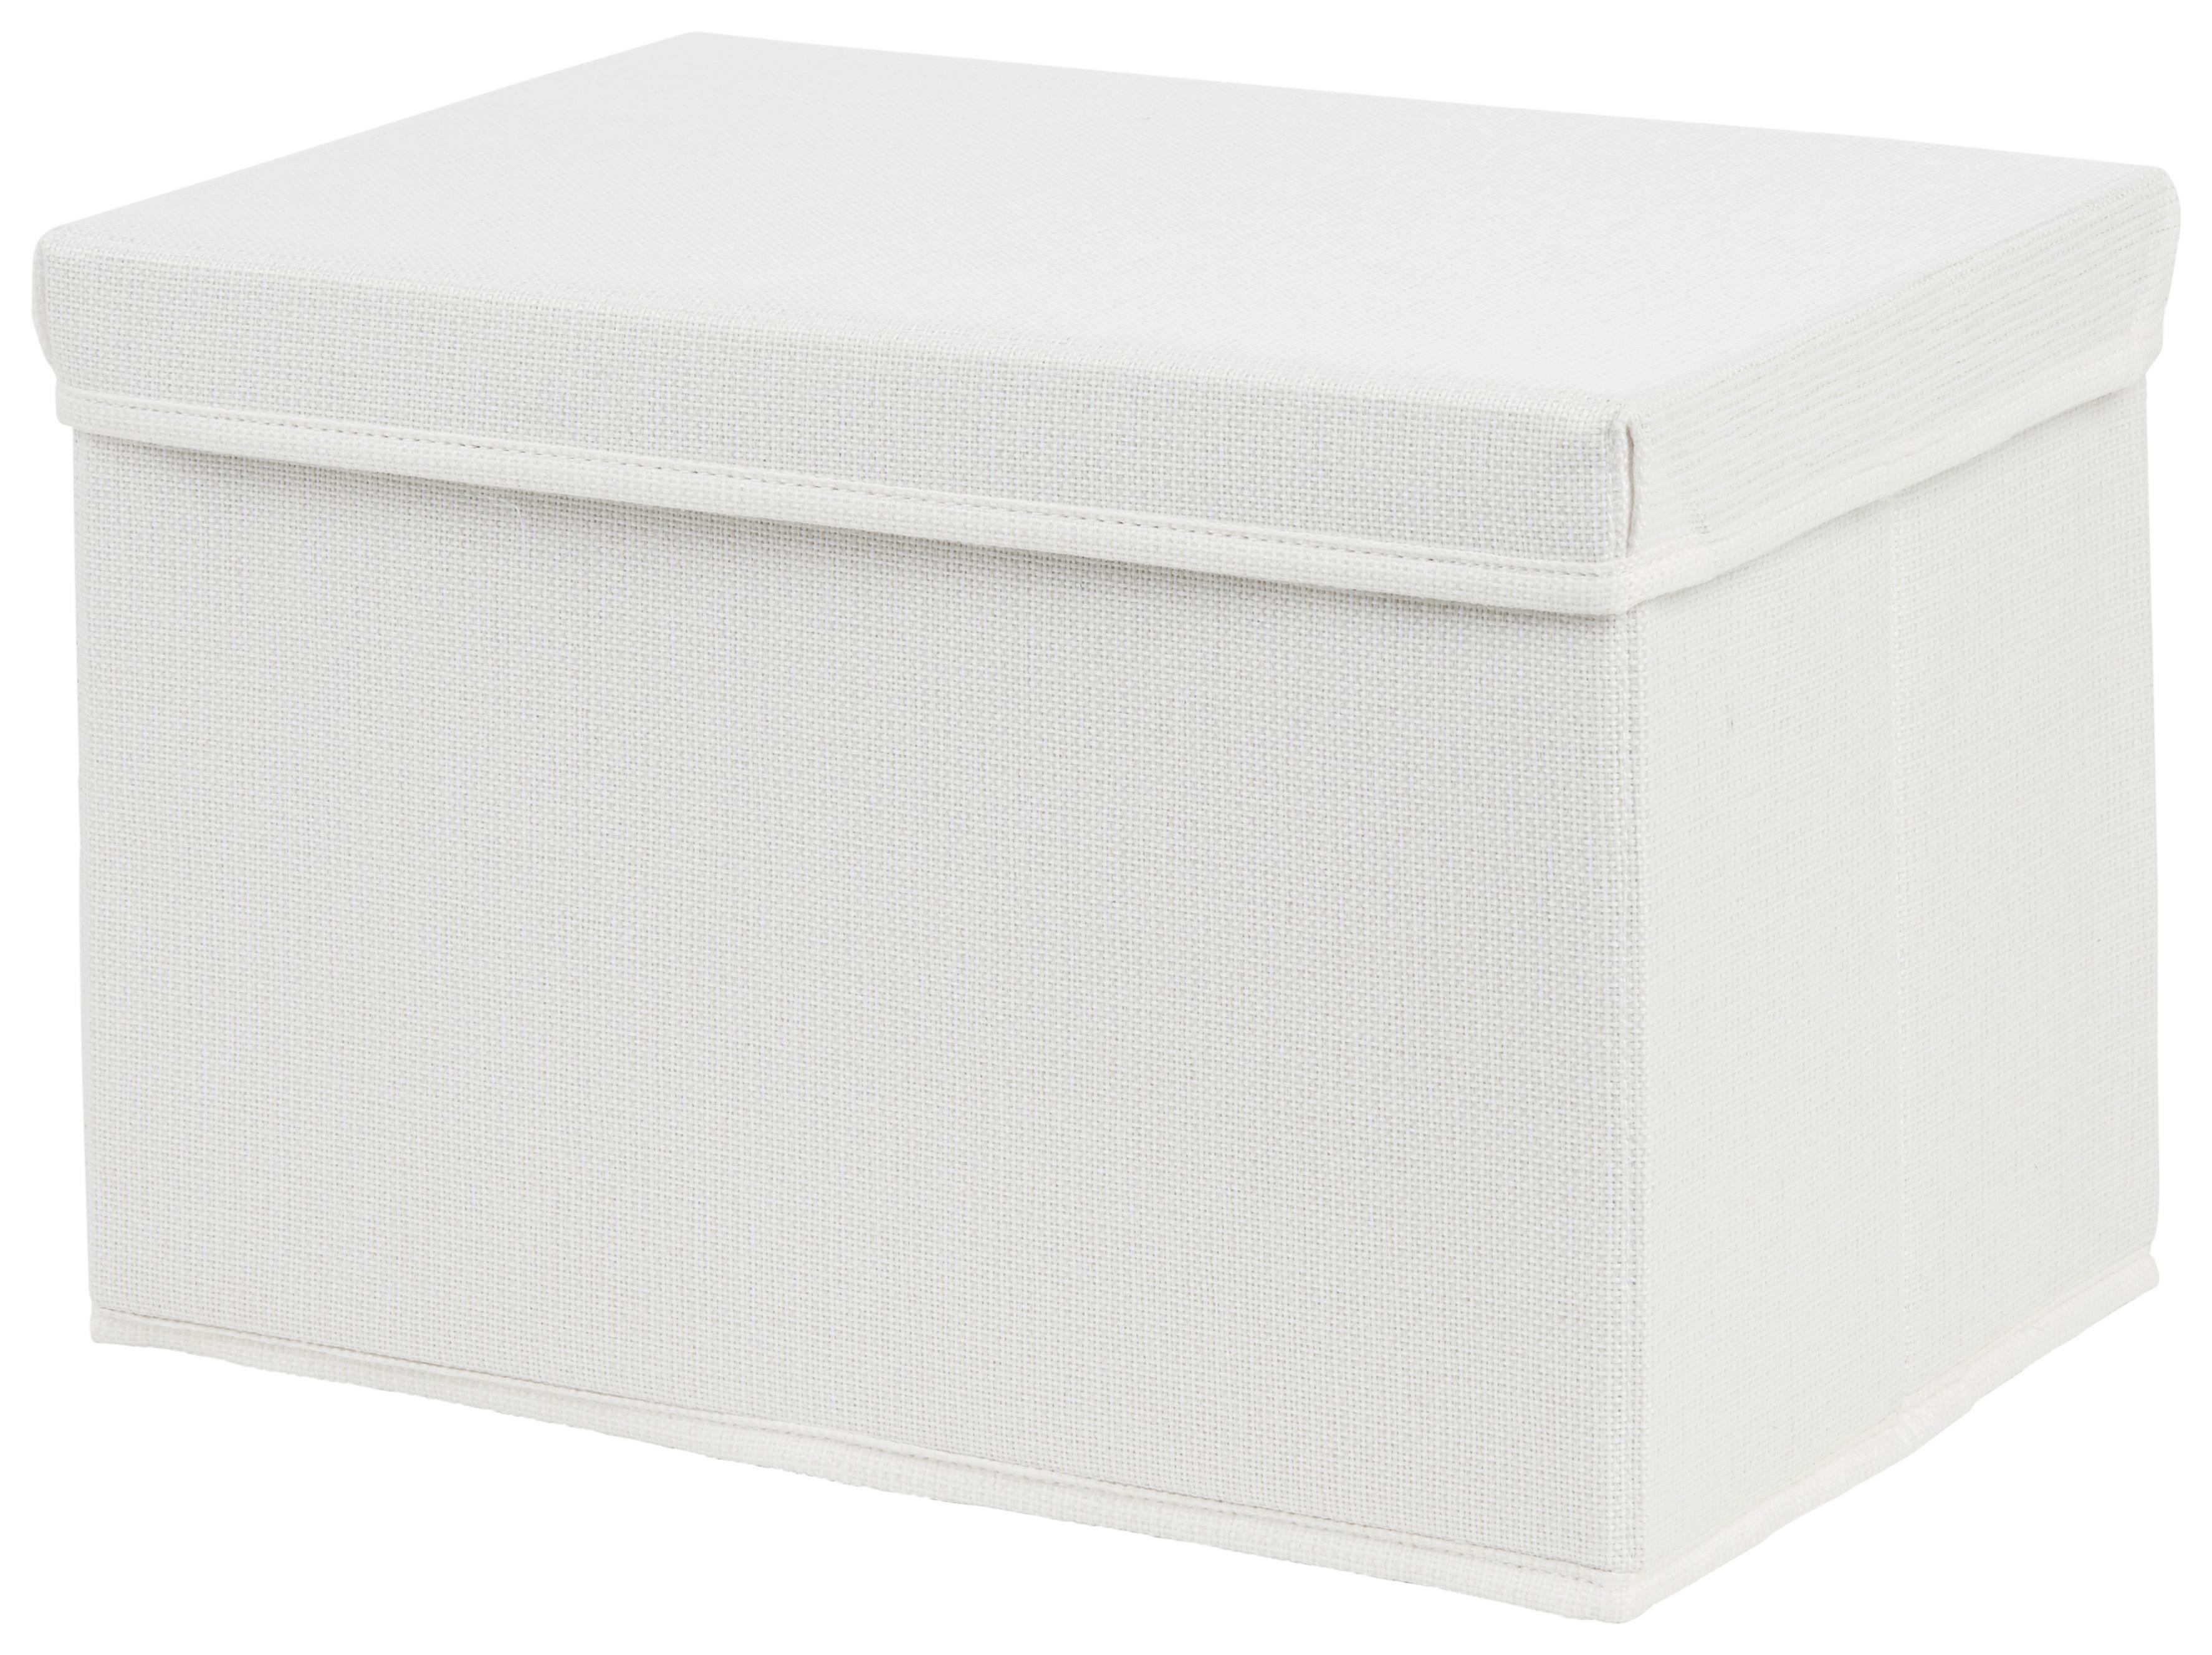 Skládací Krabice Cindy - Ca. 23l -Ext- - bílá, Moderní, karton/textil (38/26/24cm) - Premium Living